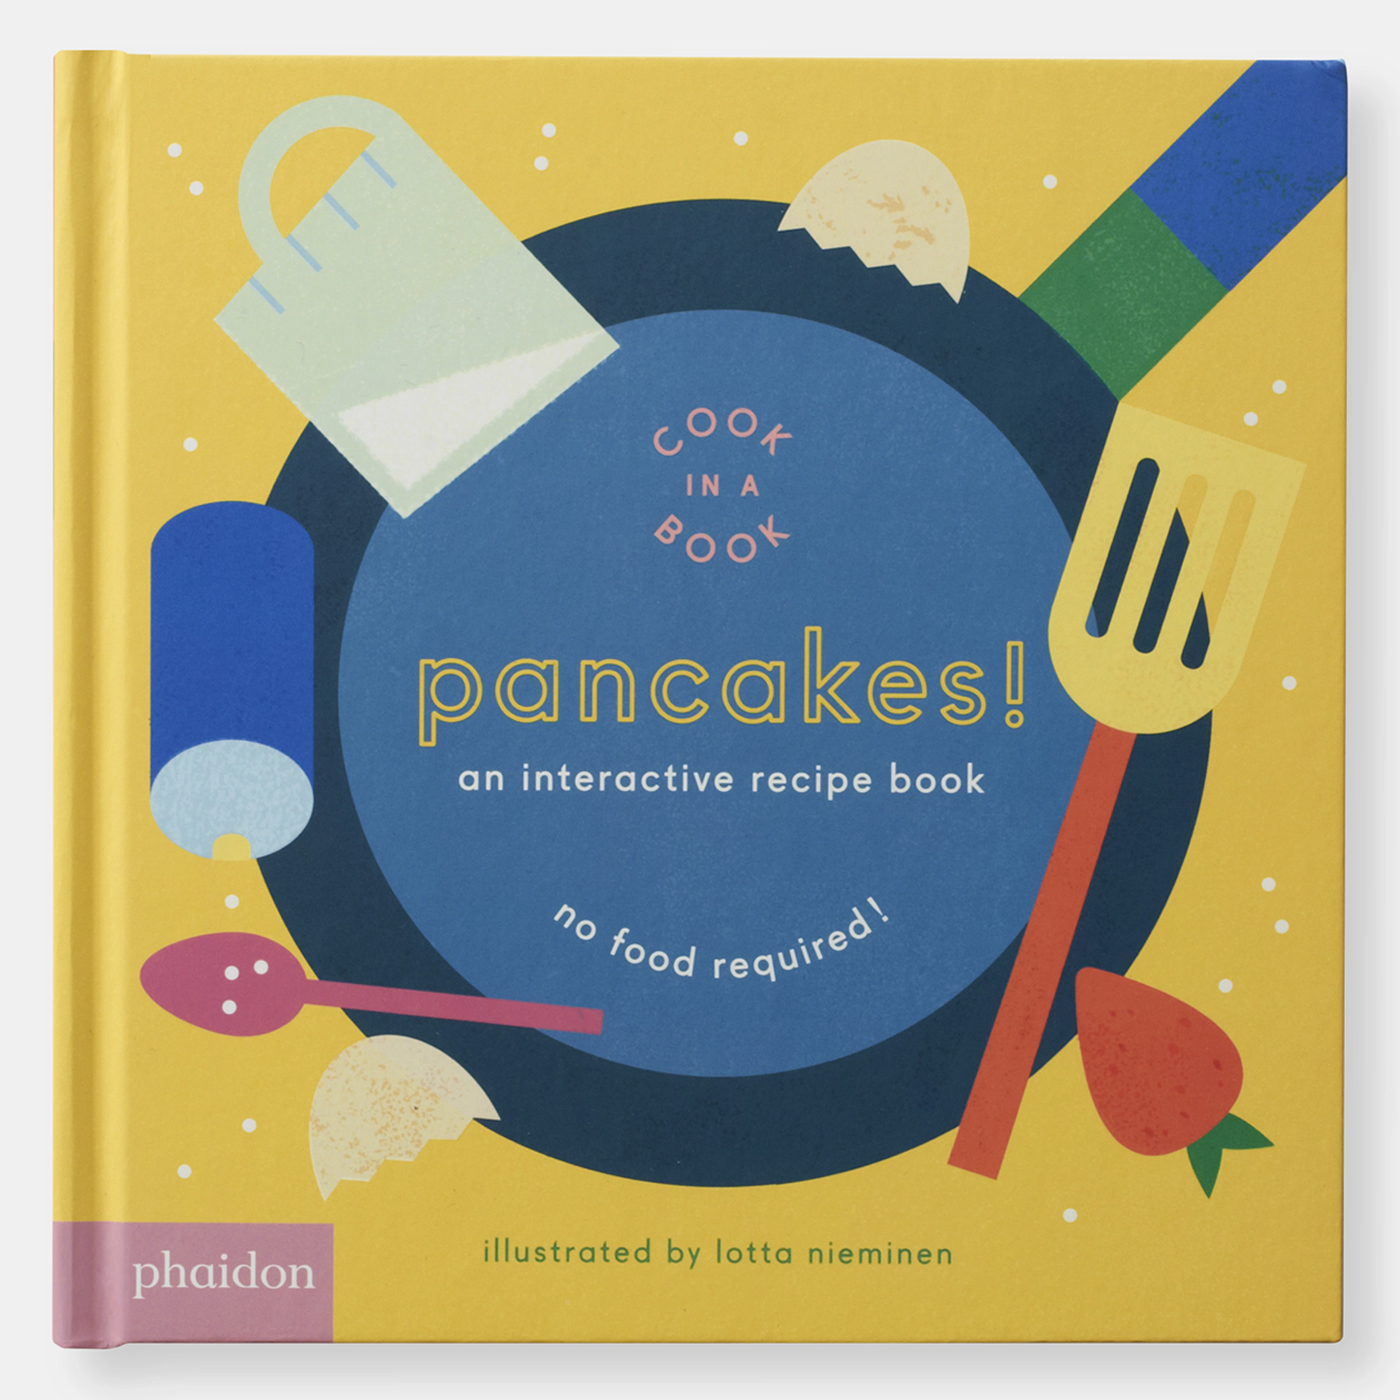 PHAIDON Cook in a Book: Pancakes!